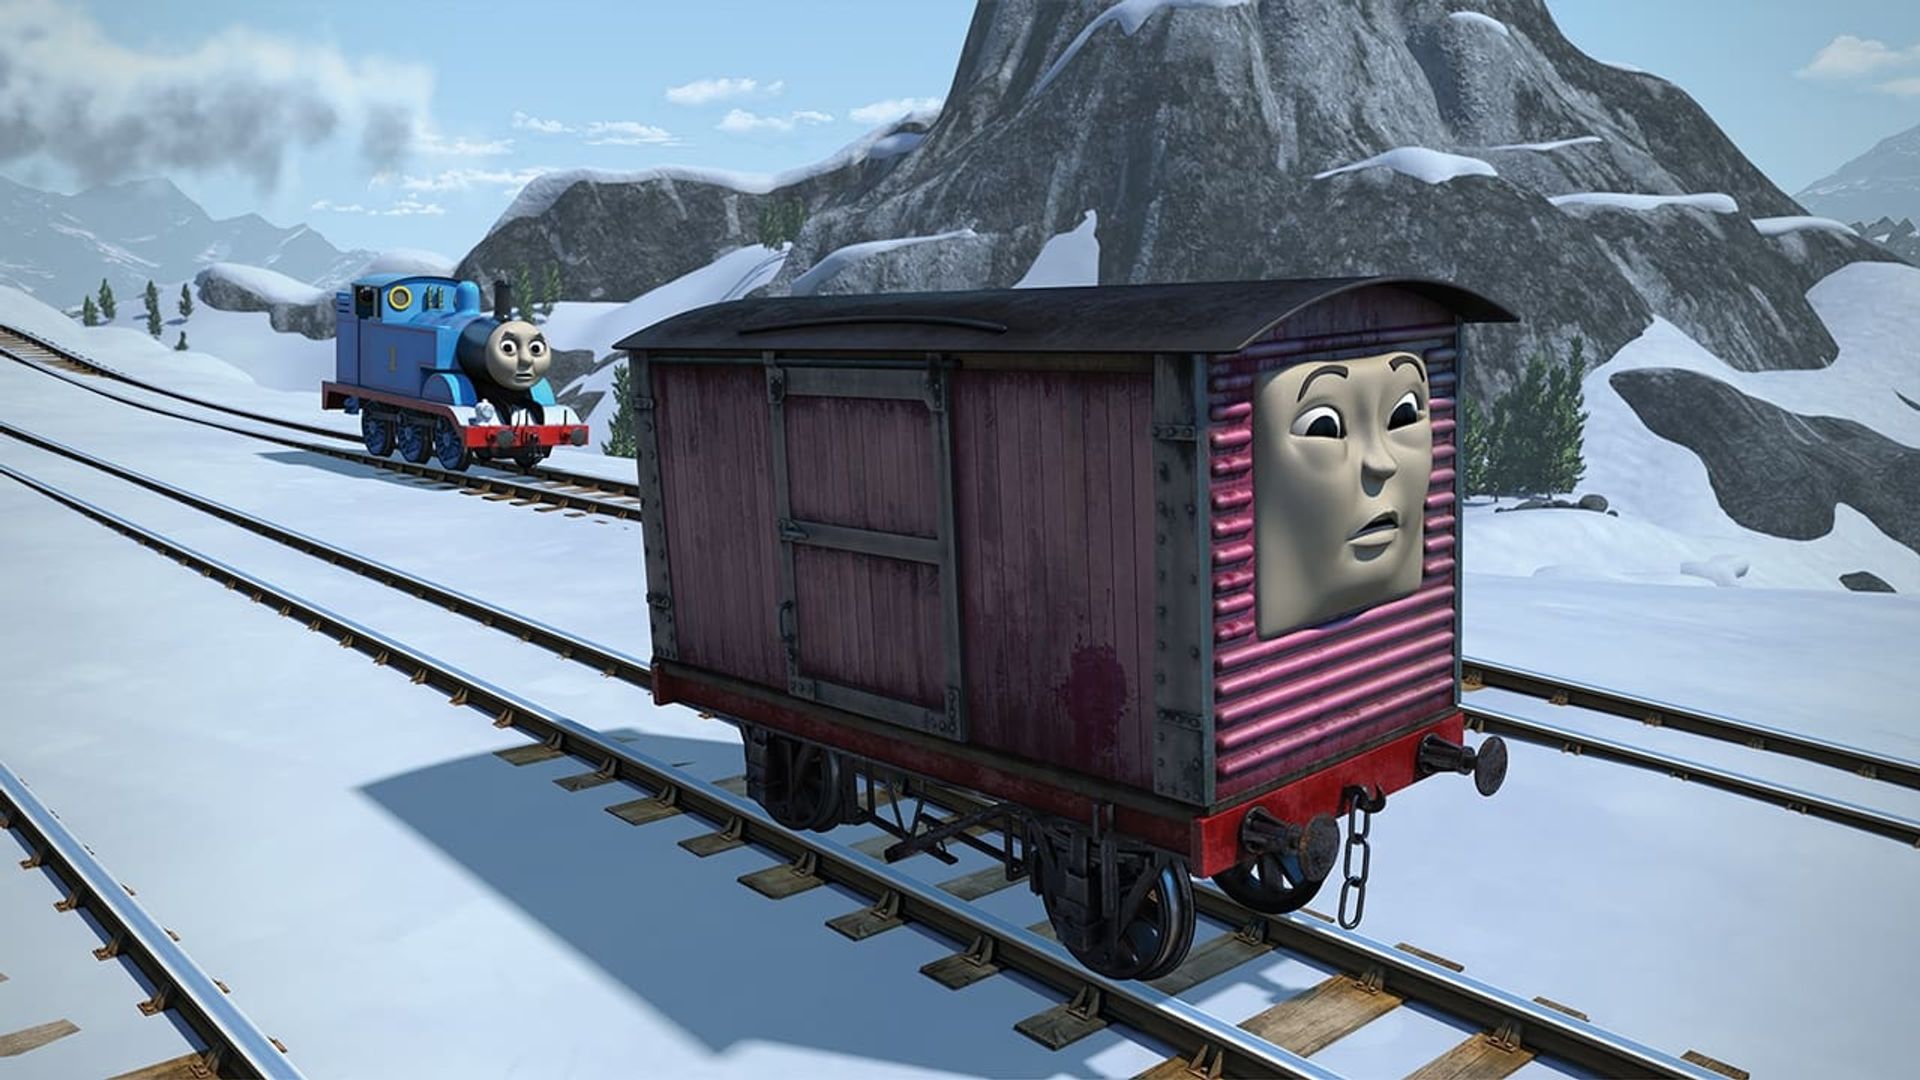 Thomas & Friends background